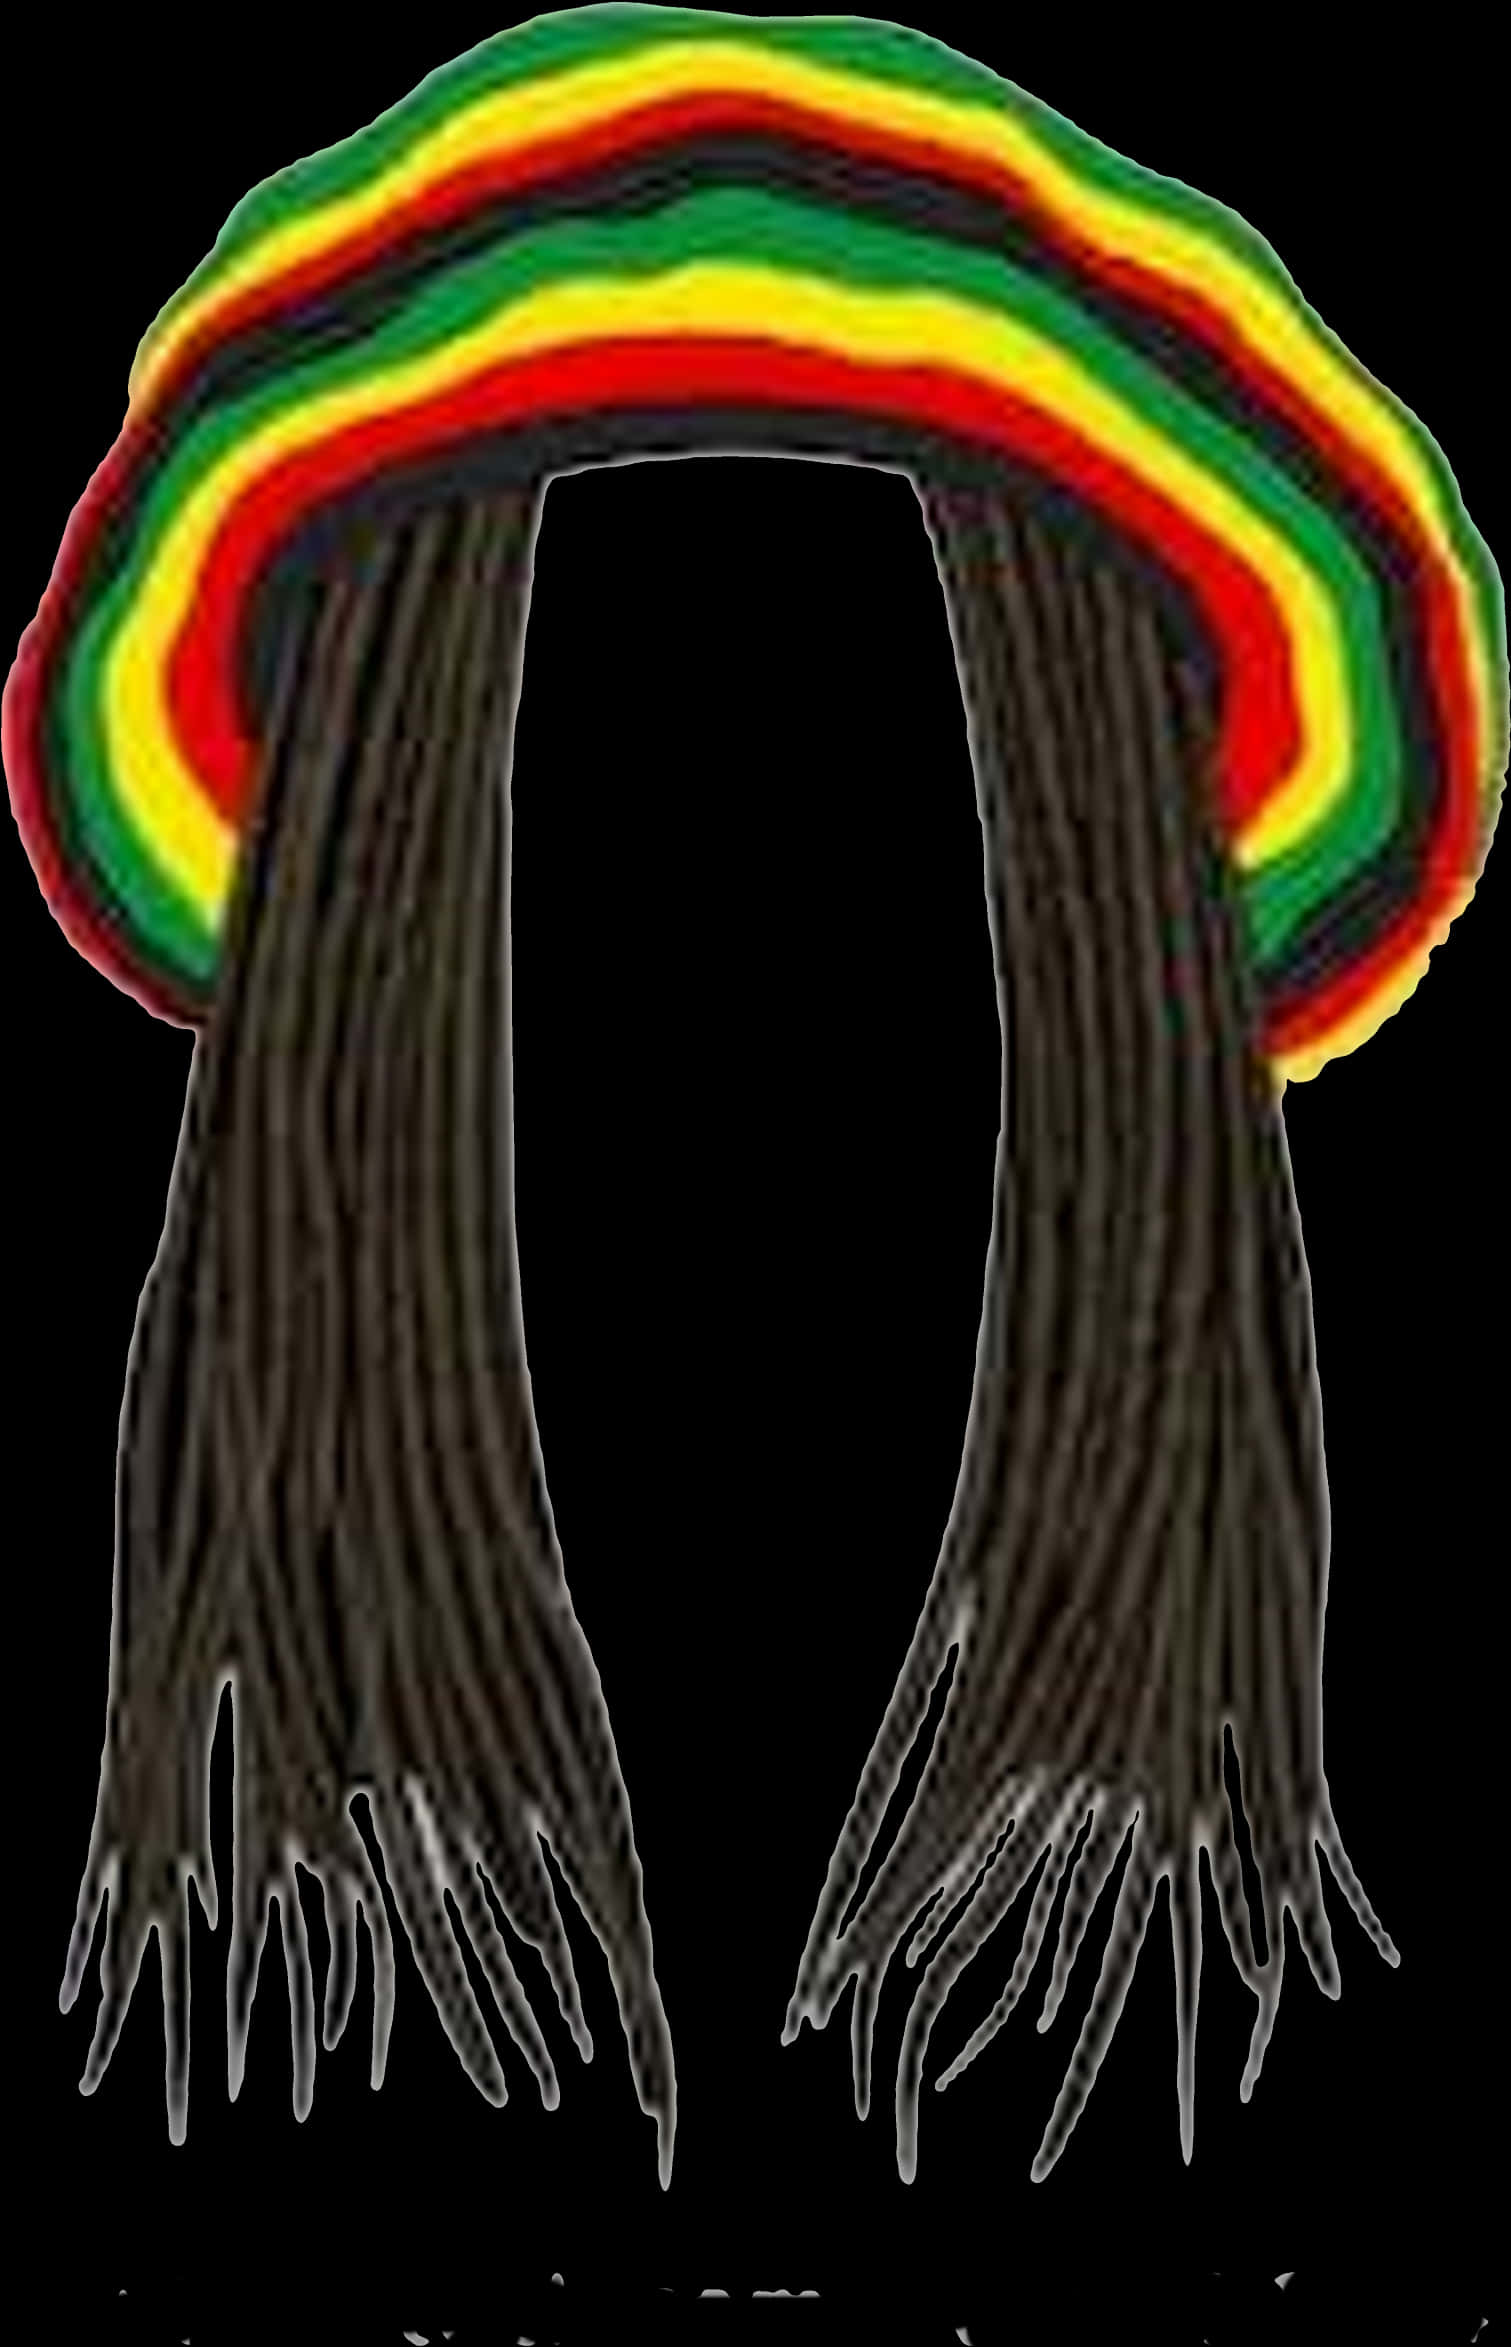 A Long Black Hair With A Rainbow Hat